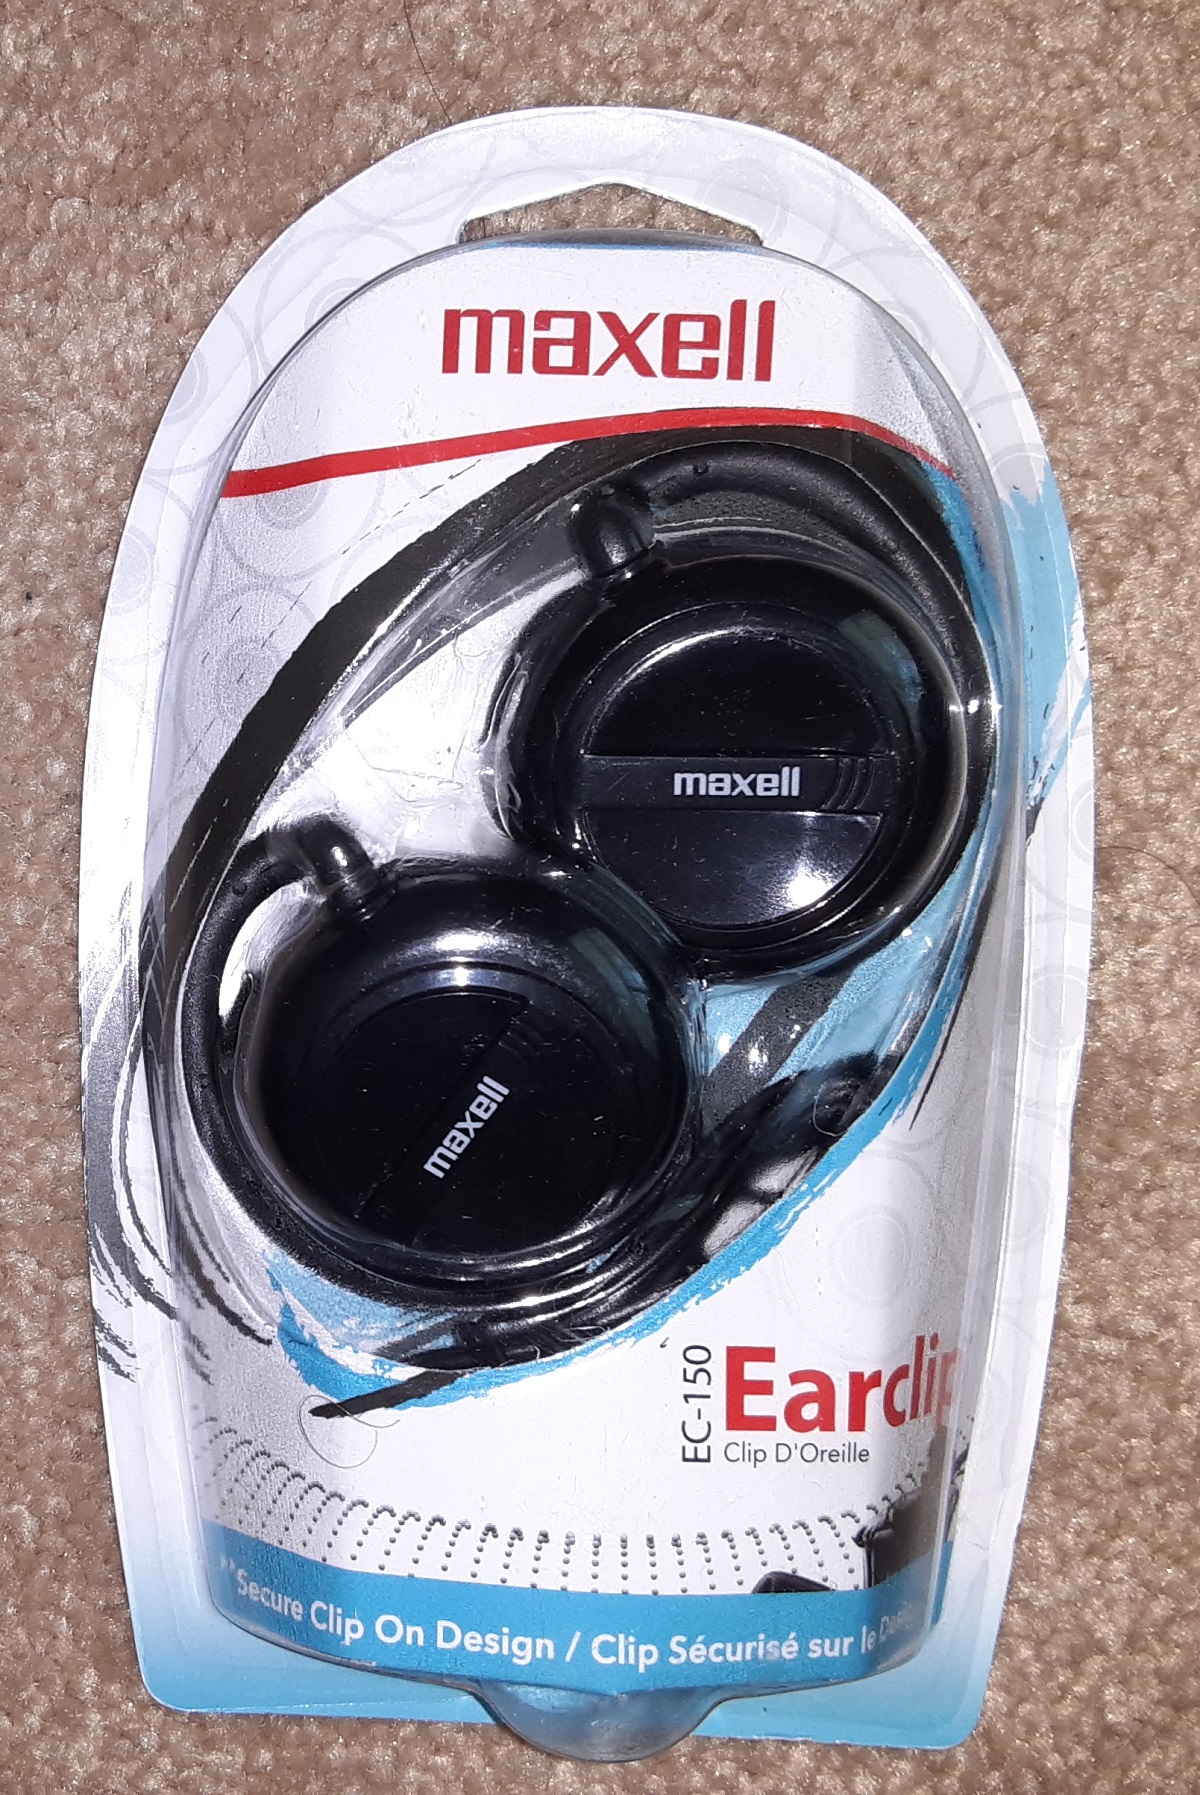 Maxell EC-150 Stereo Ear Clip Headphones, Earphone 190561 for MP3, Radio, CD, MP3 Black 